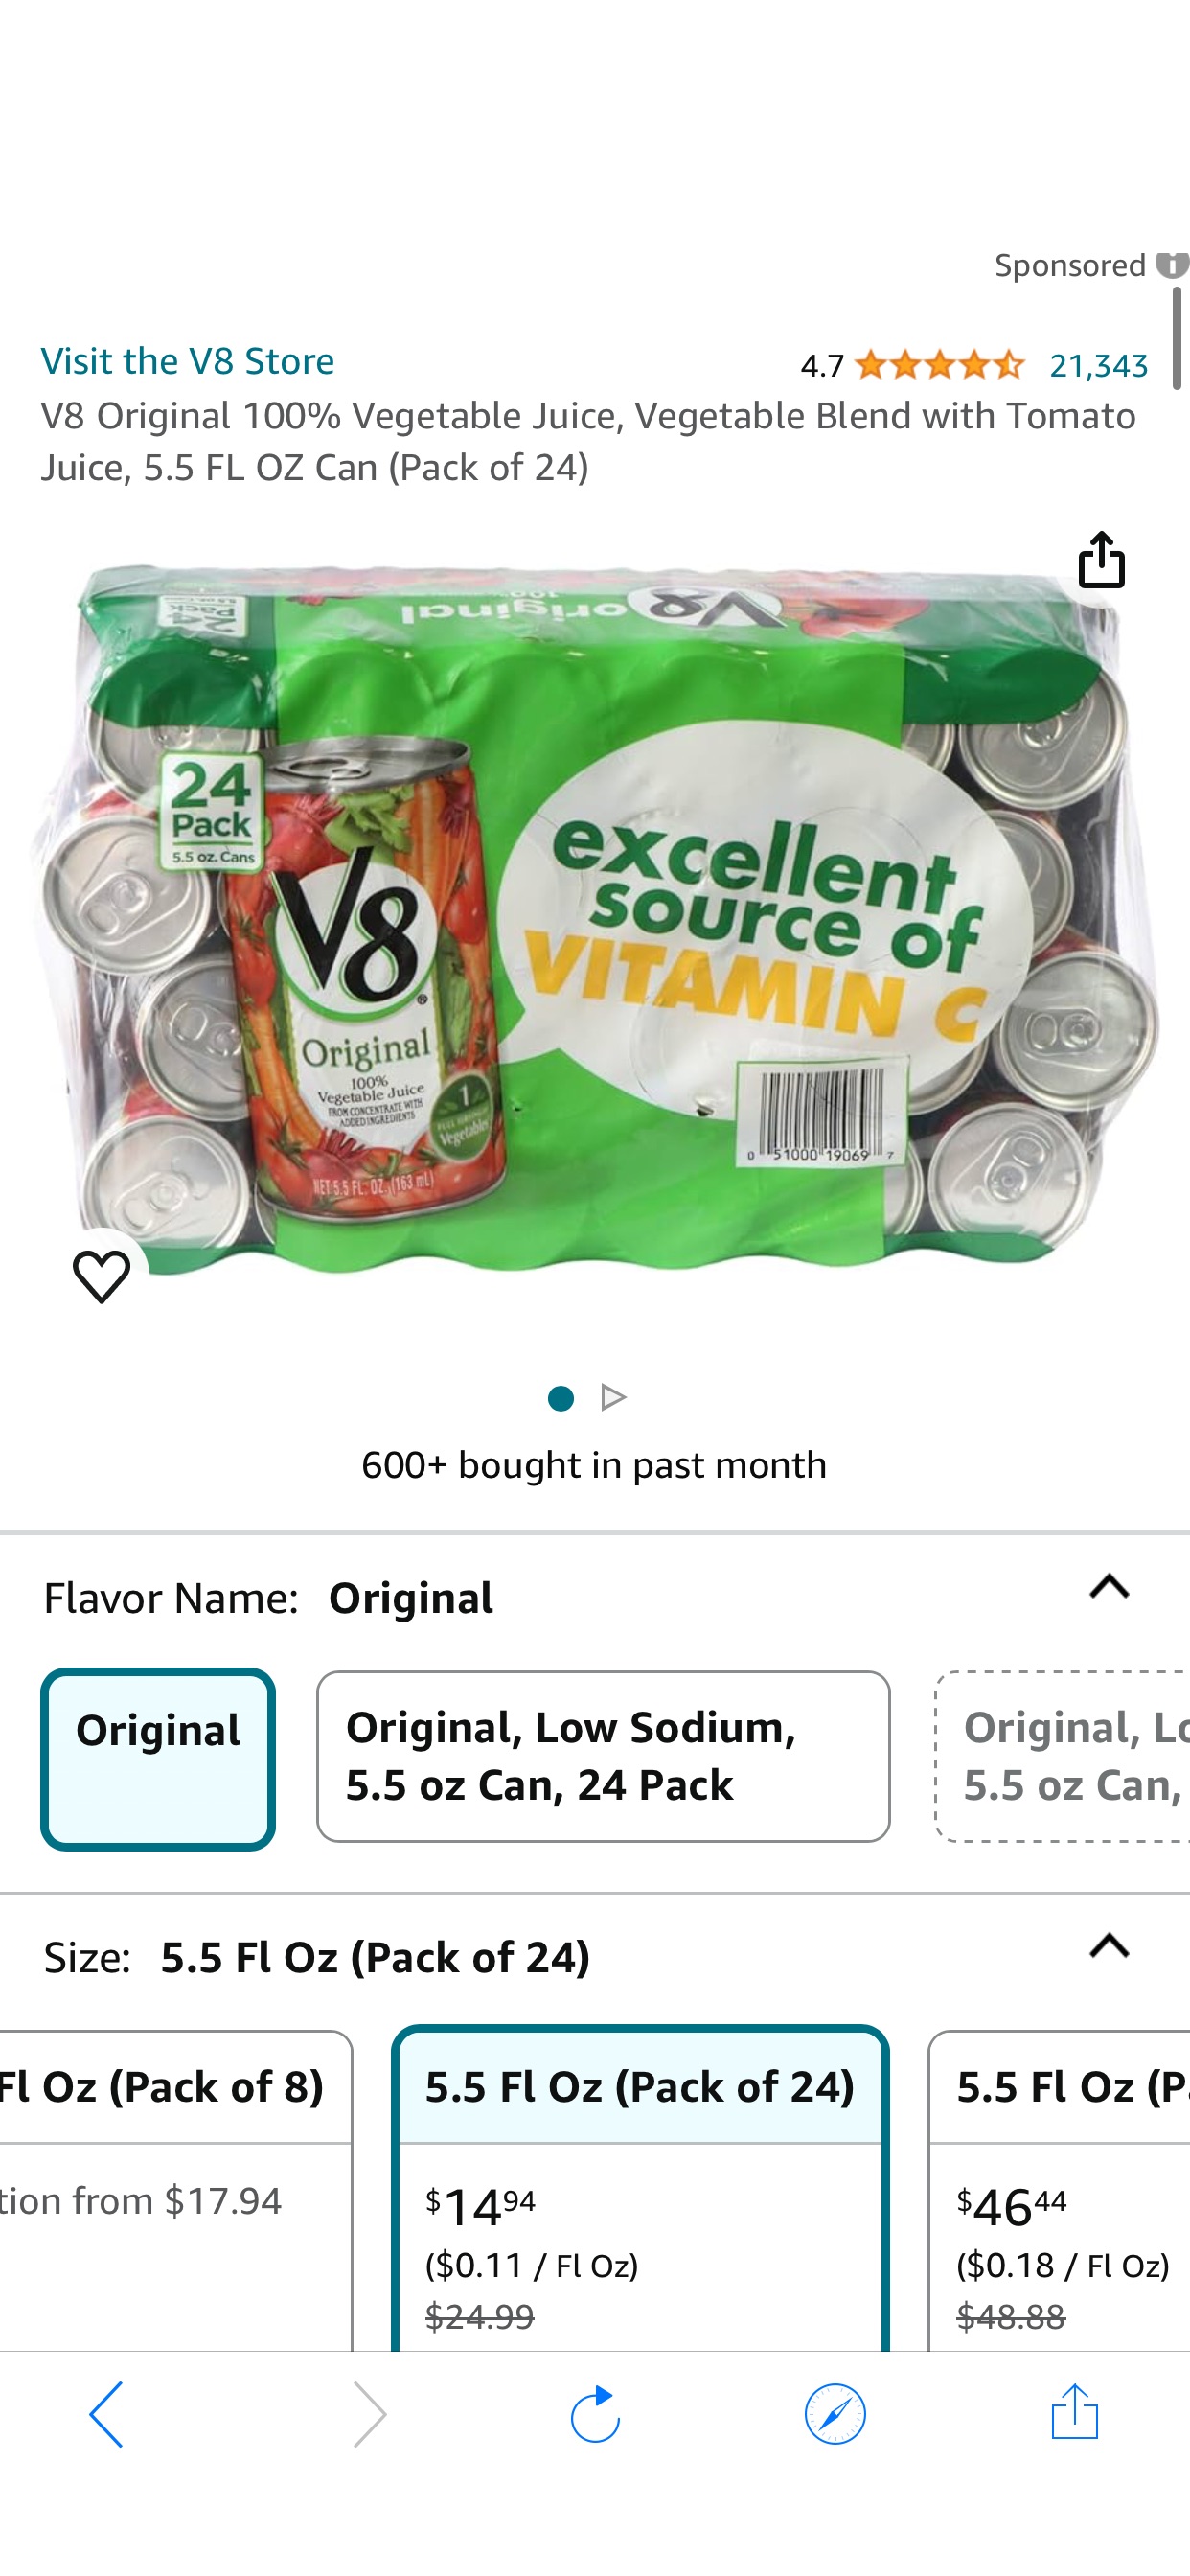 Amazon.com : V8 Original 100% Vegetable Juice, Vegetable Blend with Tomato Juice, 5.5 FL OZ Can (Pack of 24) : Grocery & Gourmet Food 蔬菜汁24瓶